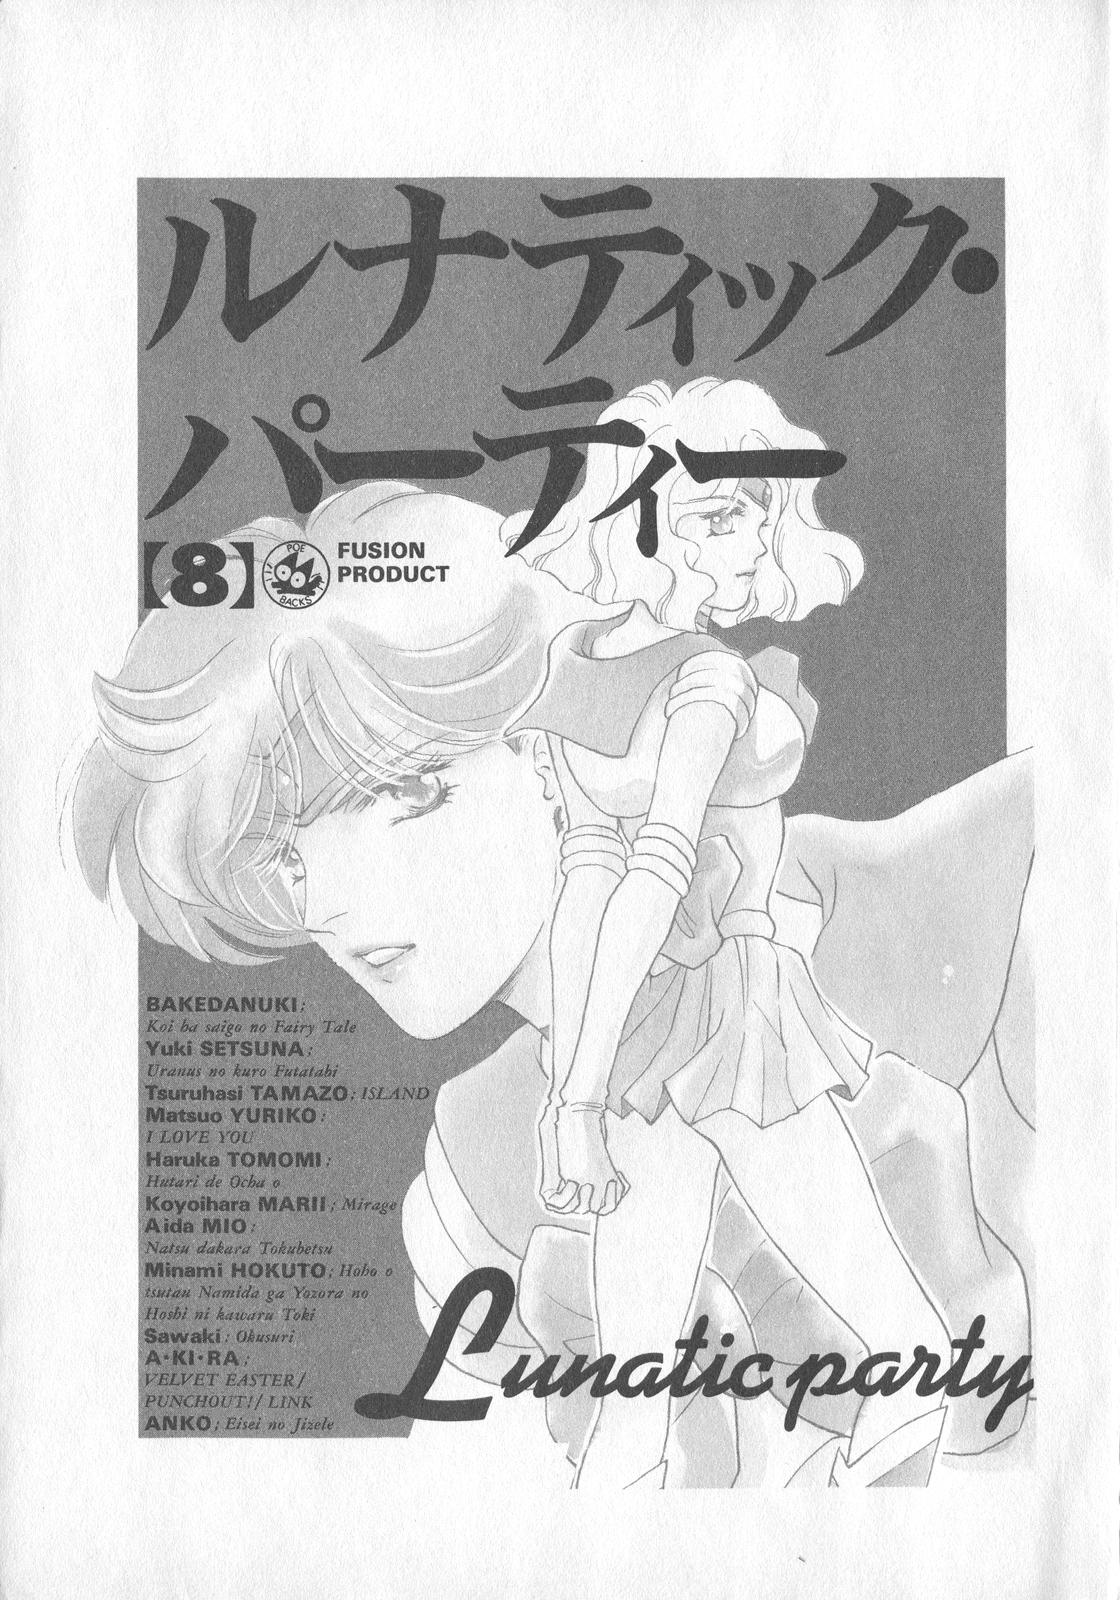 Bisexual Lunatic Party 8 - Sailor moon Coroa - Page 2